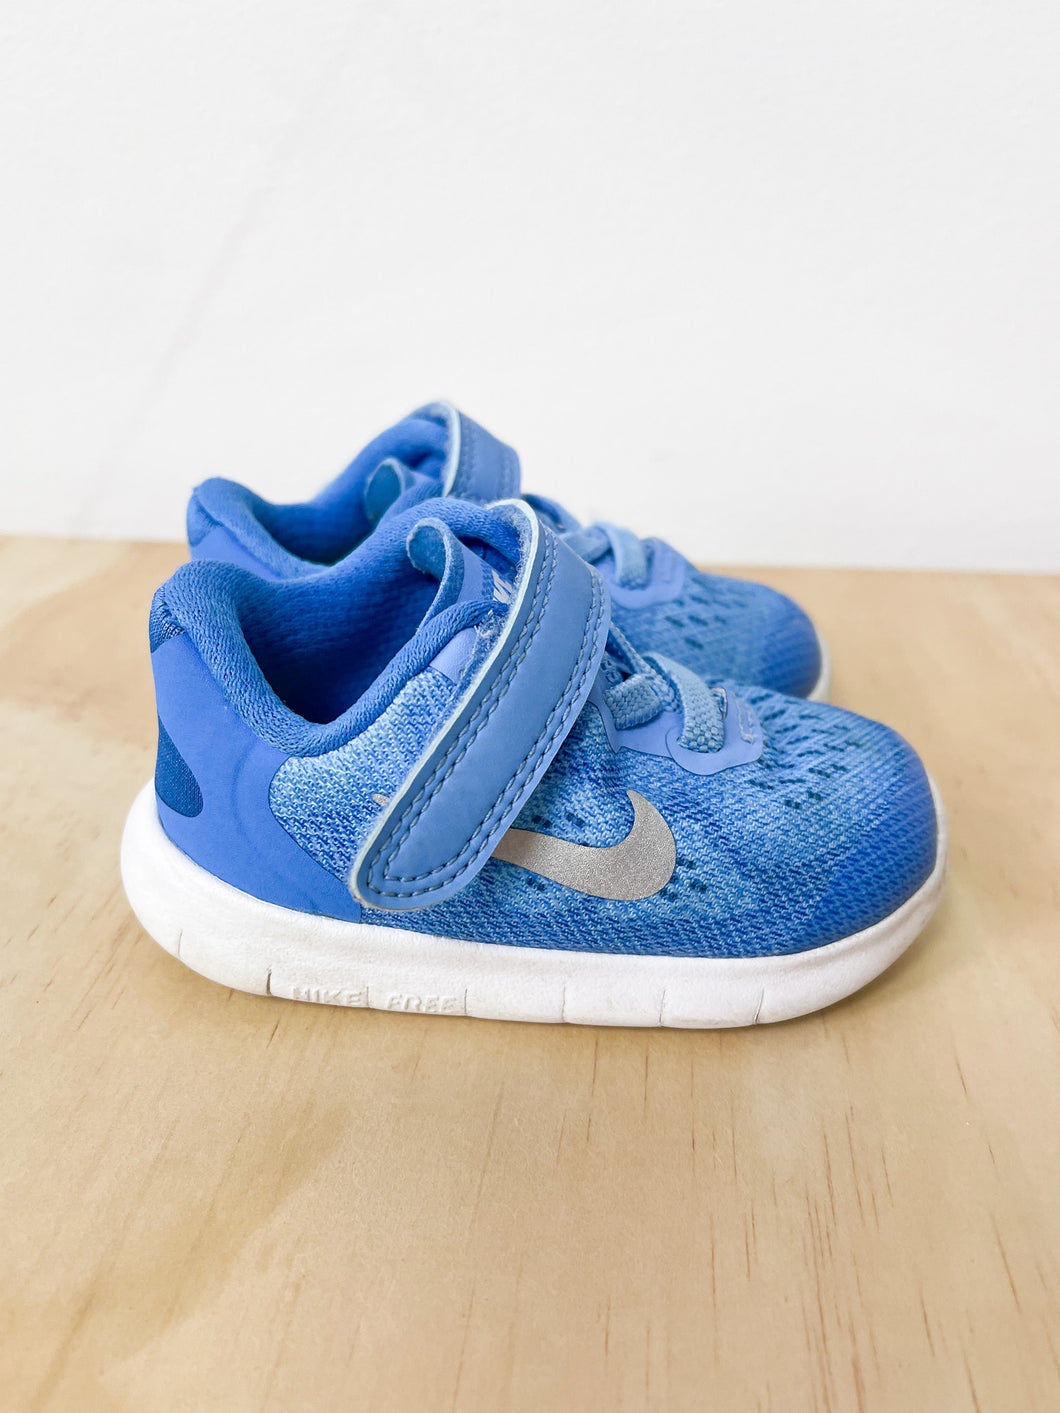 Kids Blue Nike Runners Size 4